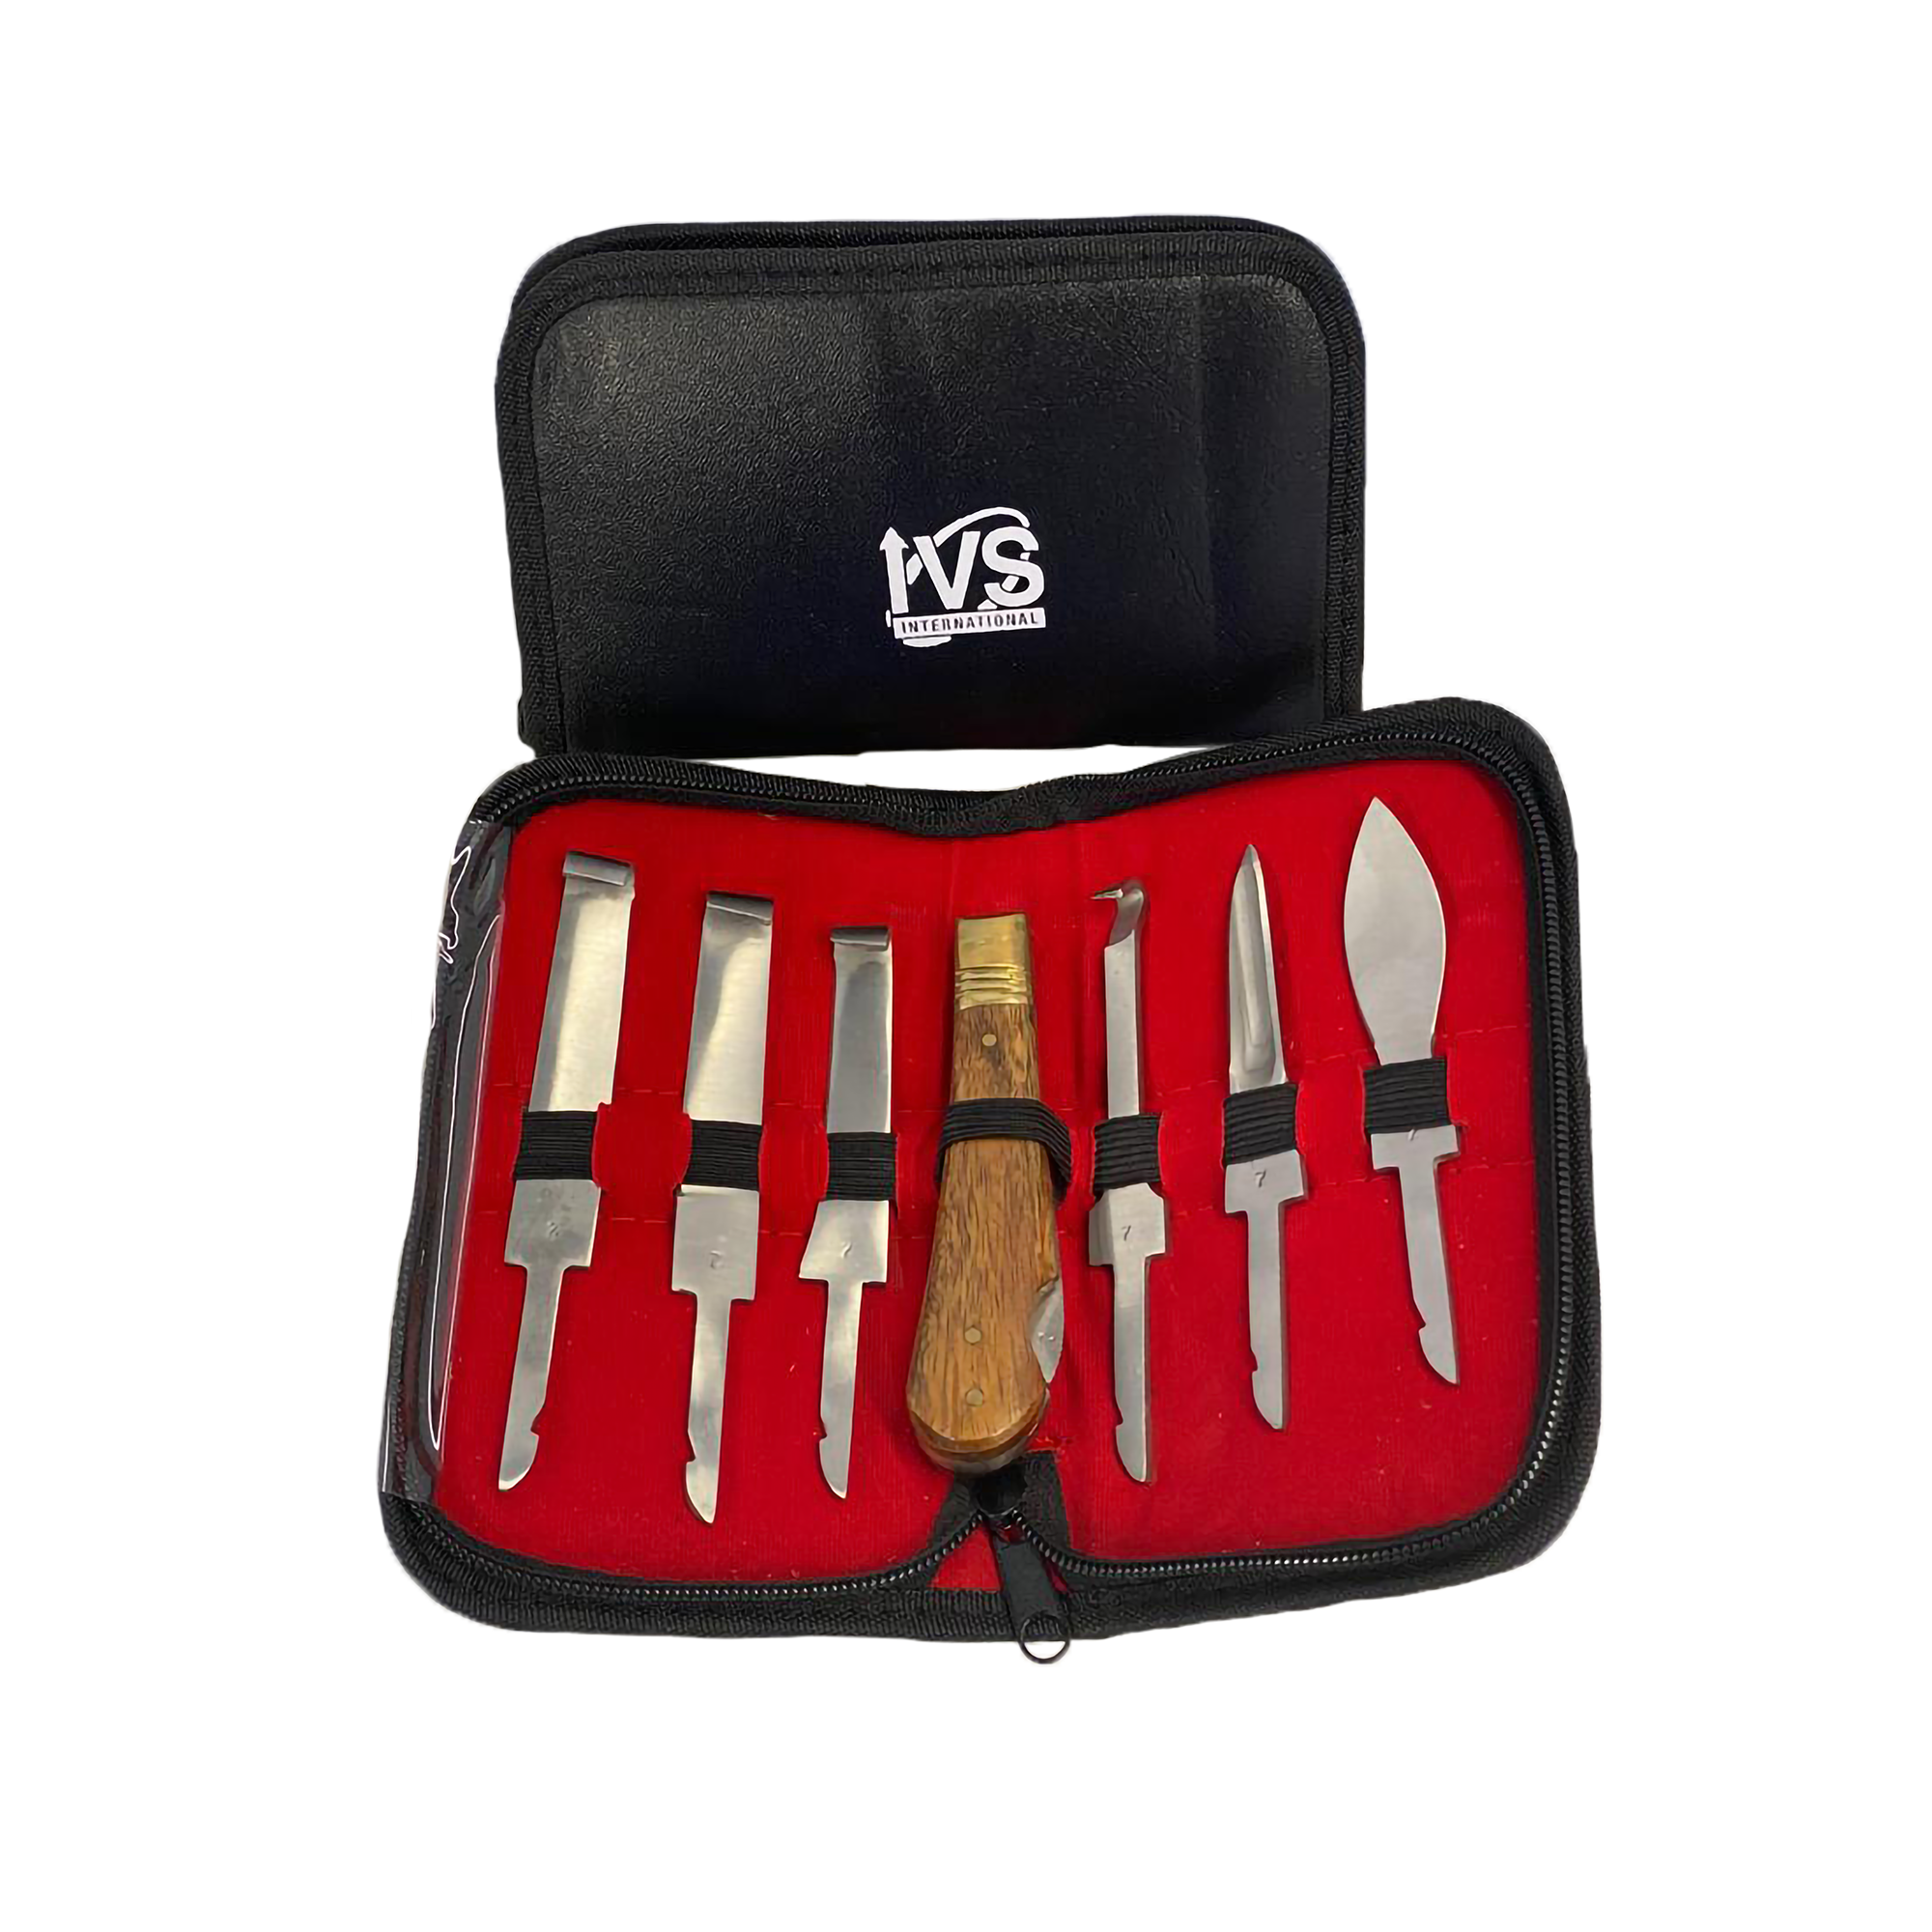 Kit de cuchillos para pezuñas